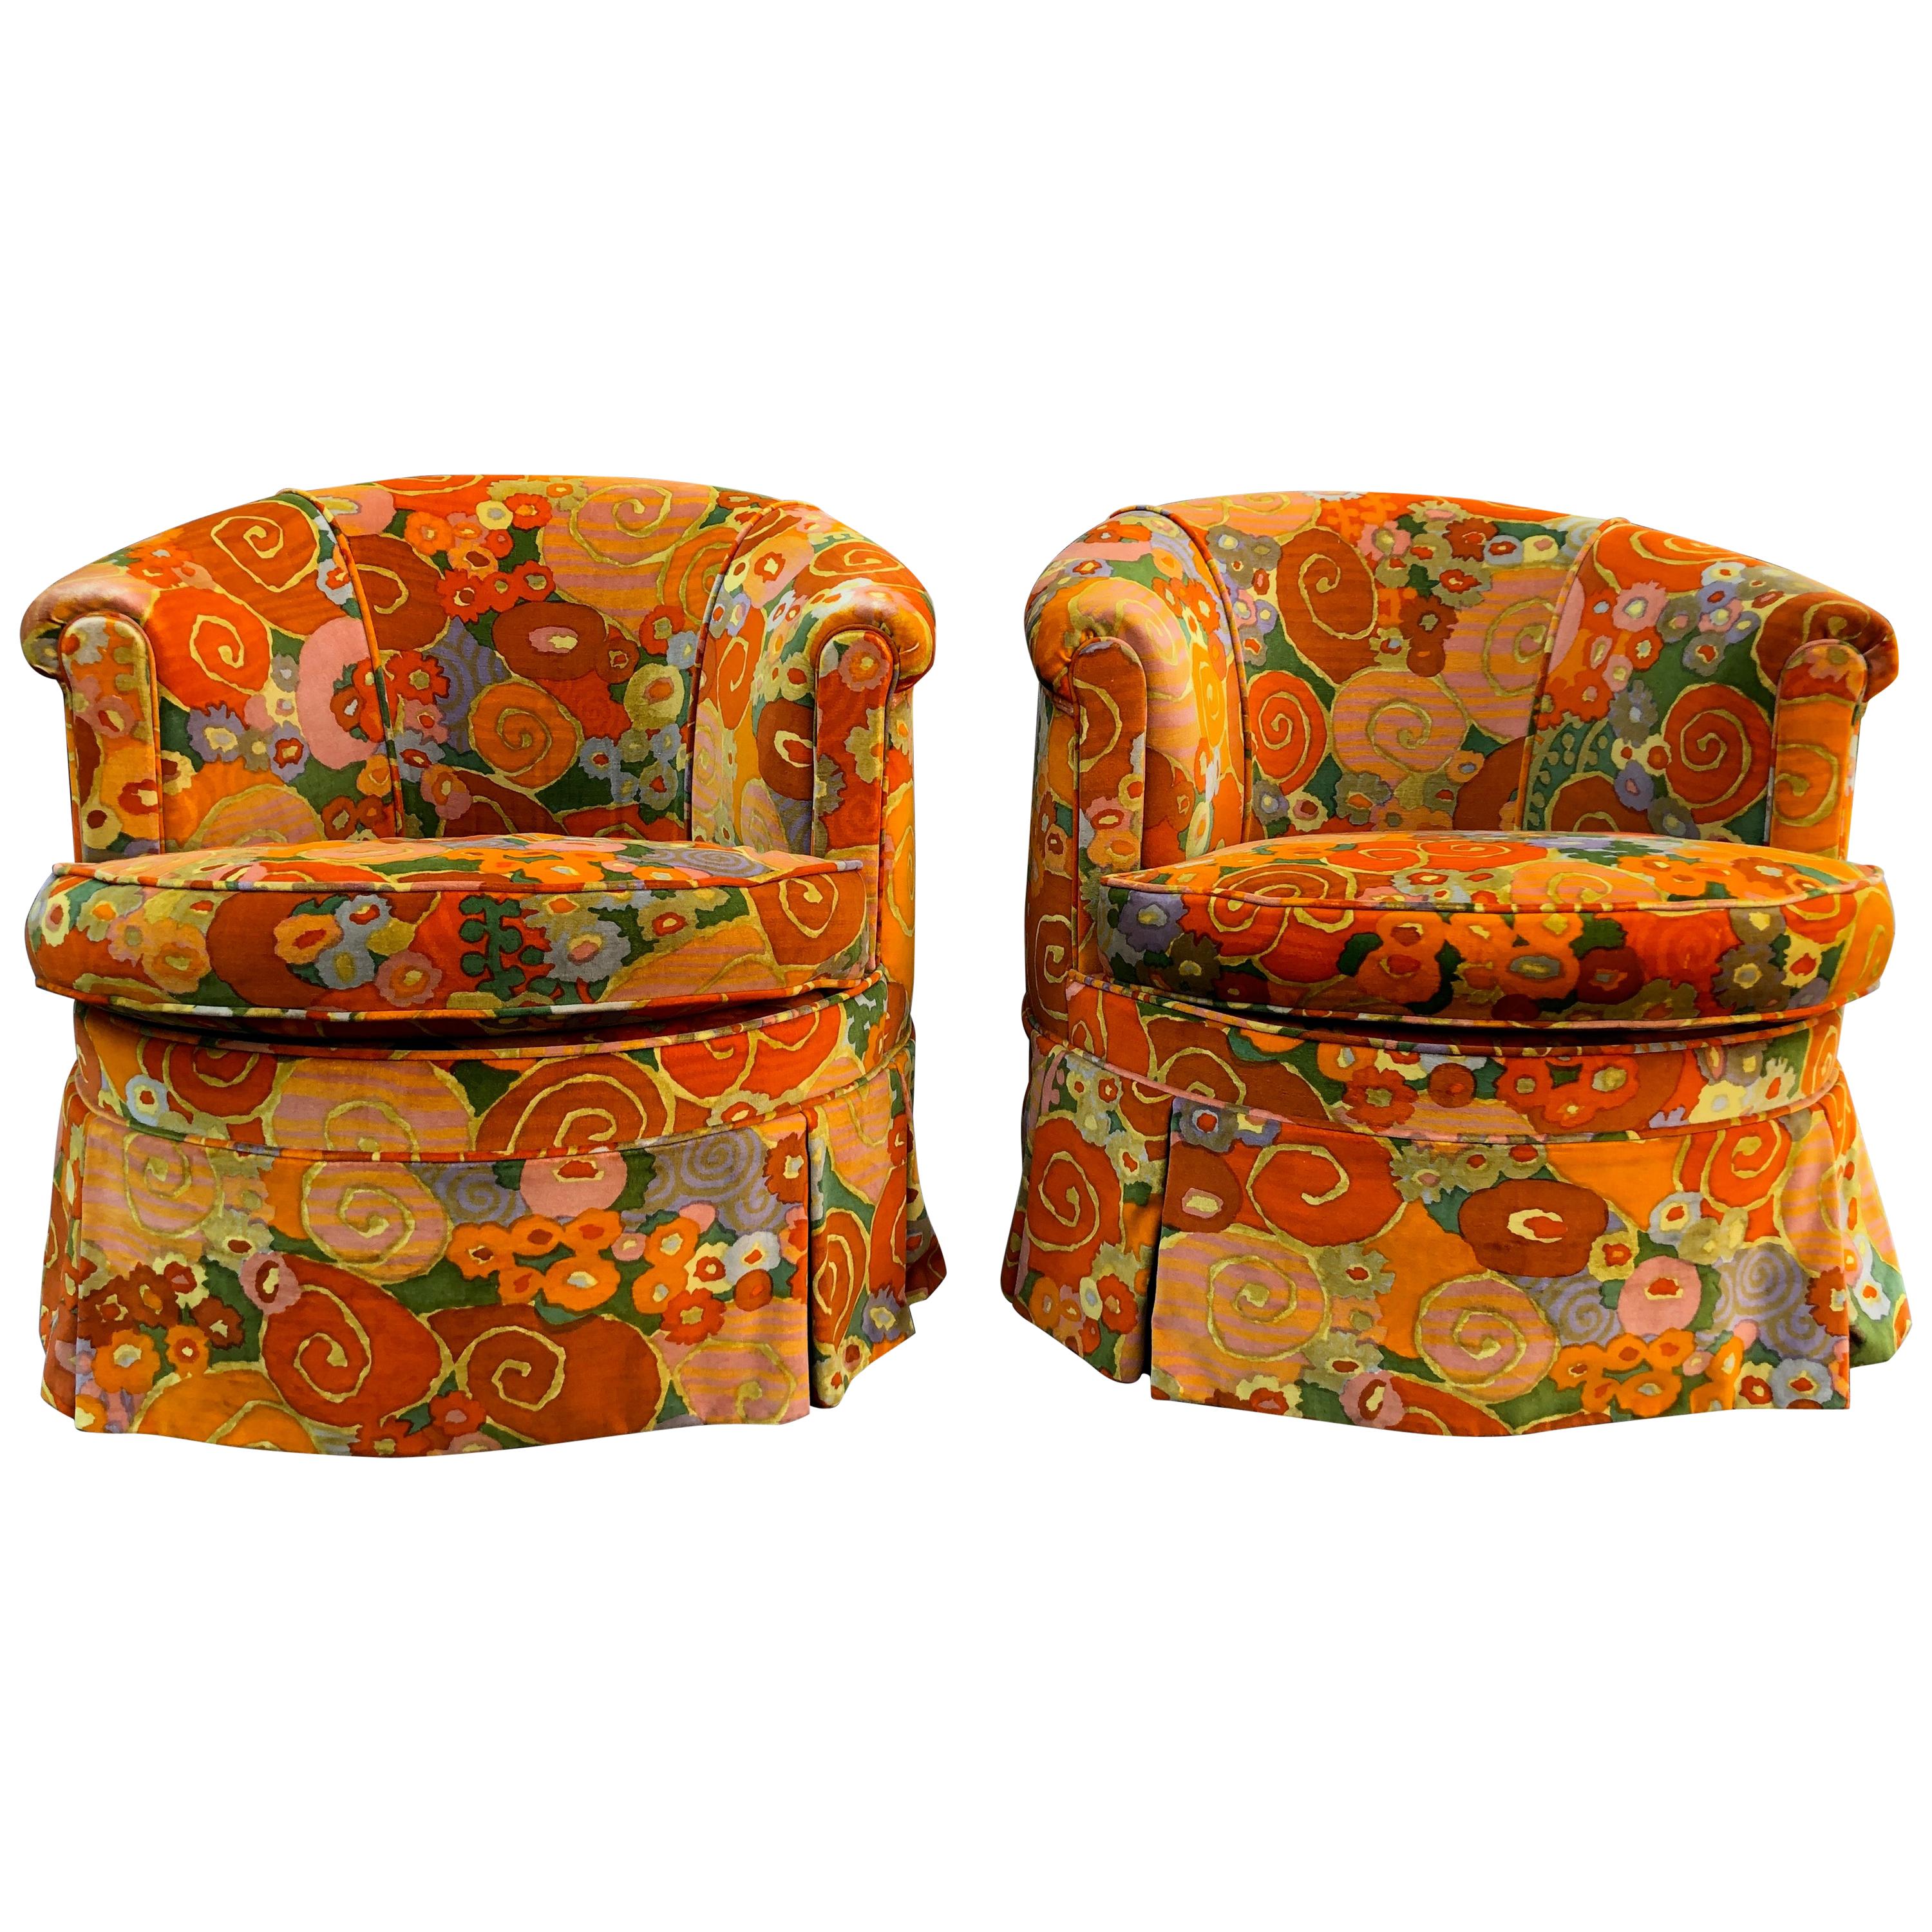 Pair of Barrel Chairs in Jack Lenor Larsen Fabric